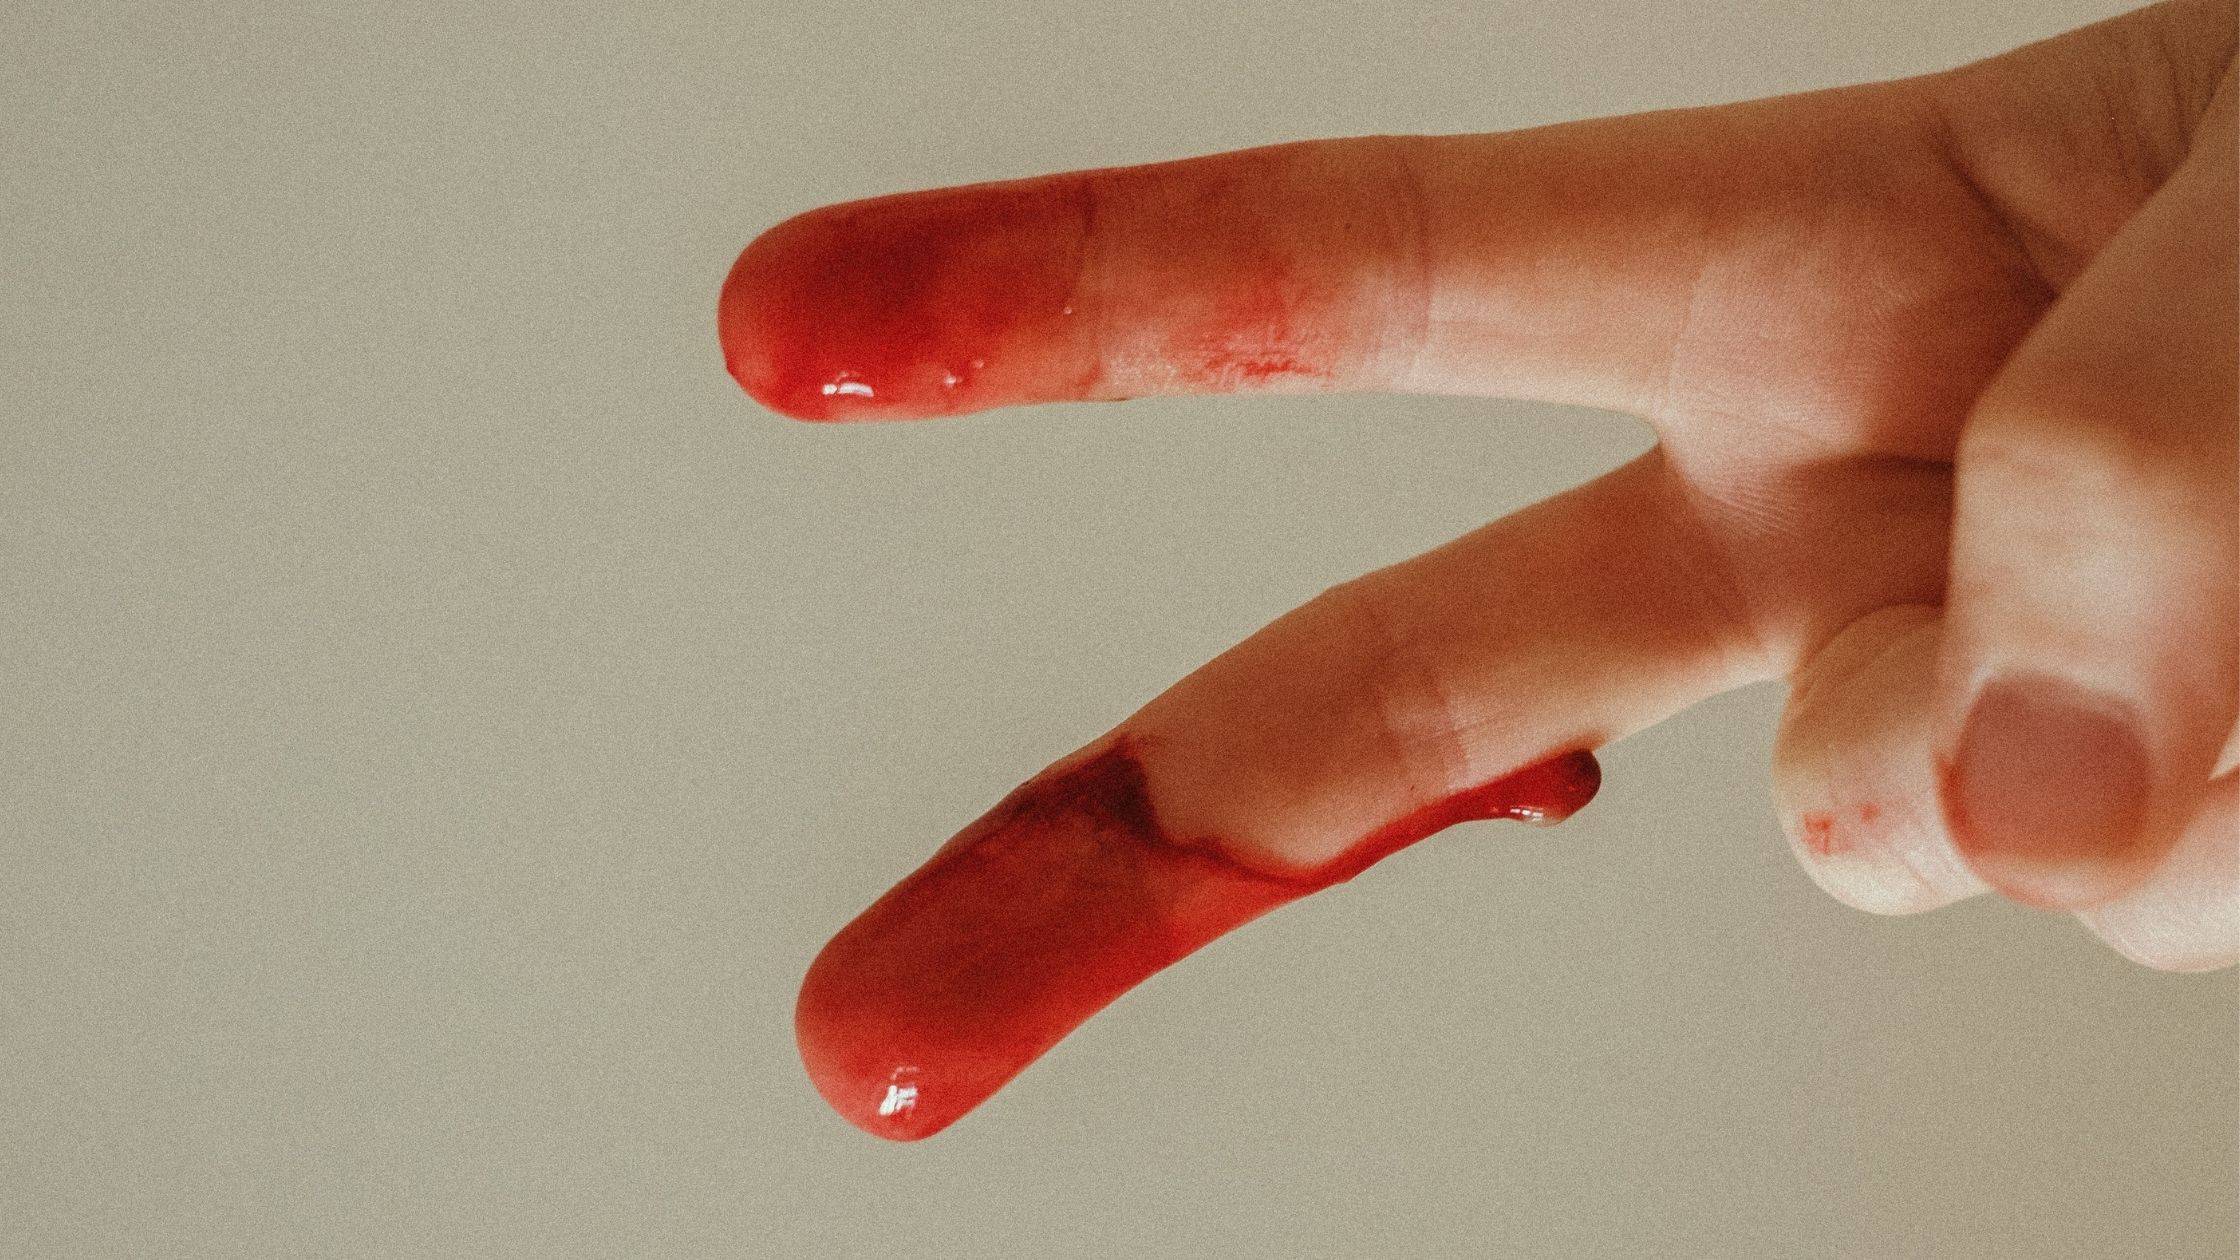 Blood on hand